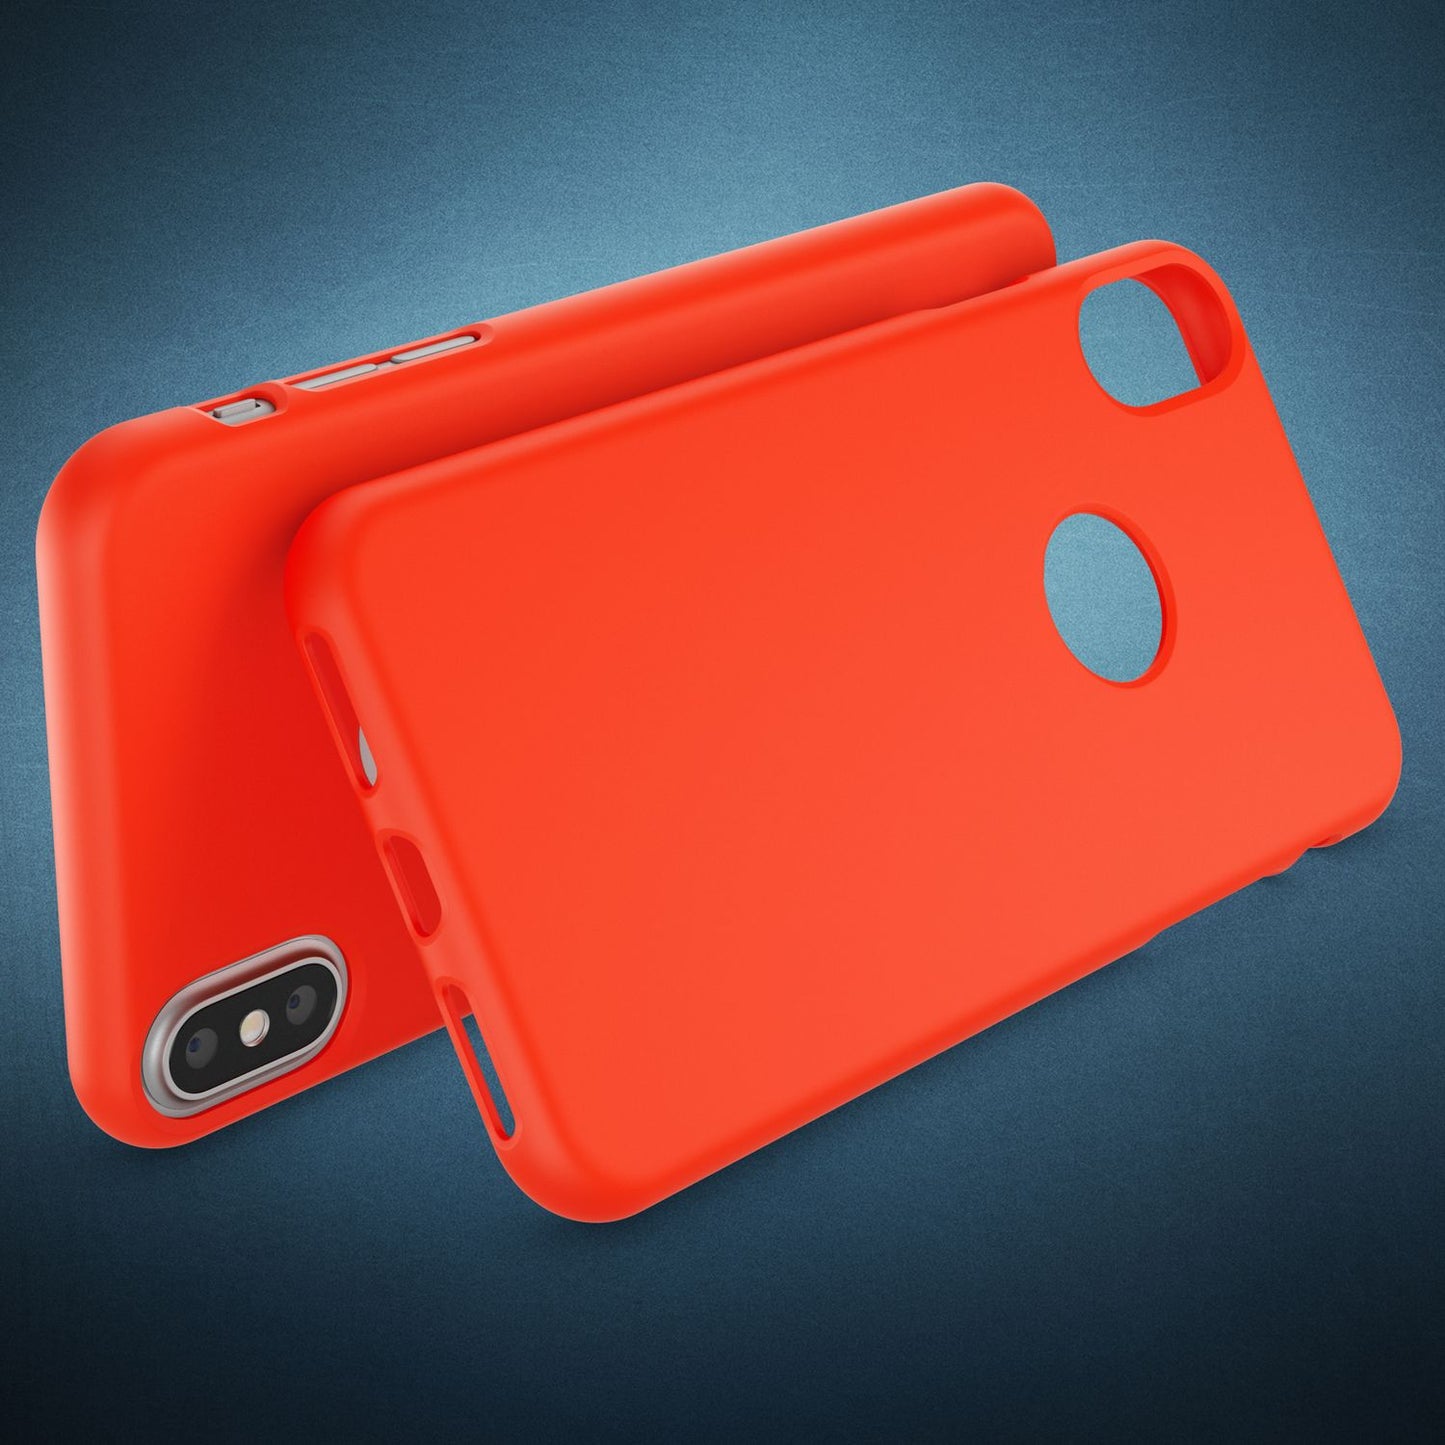 NALIA Neon Hülle für Apple iPhone X XS, Slim Silikon Schutz Cover Bumper Case